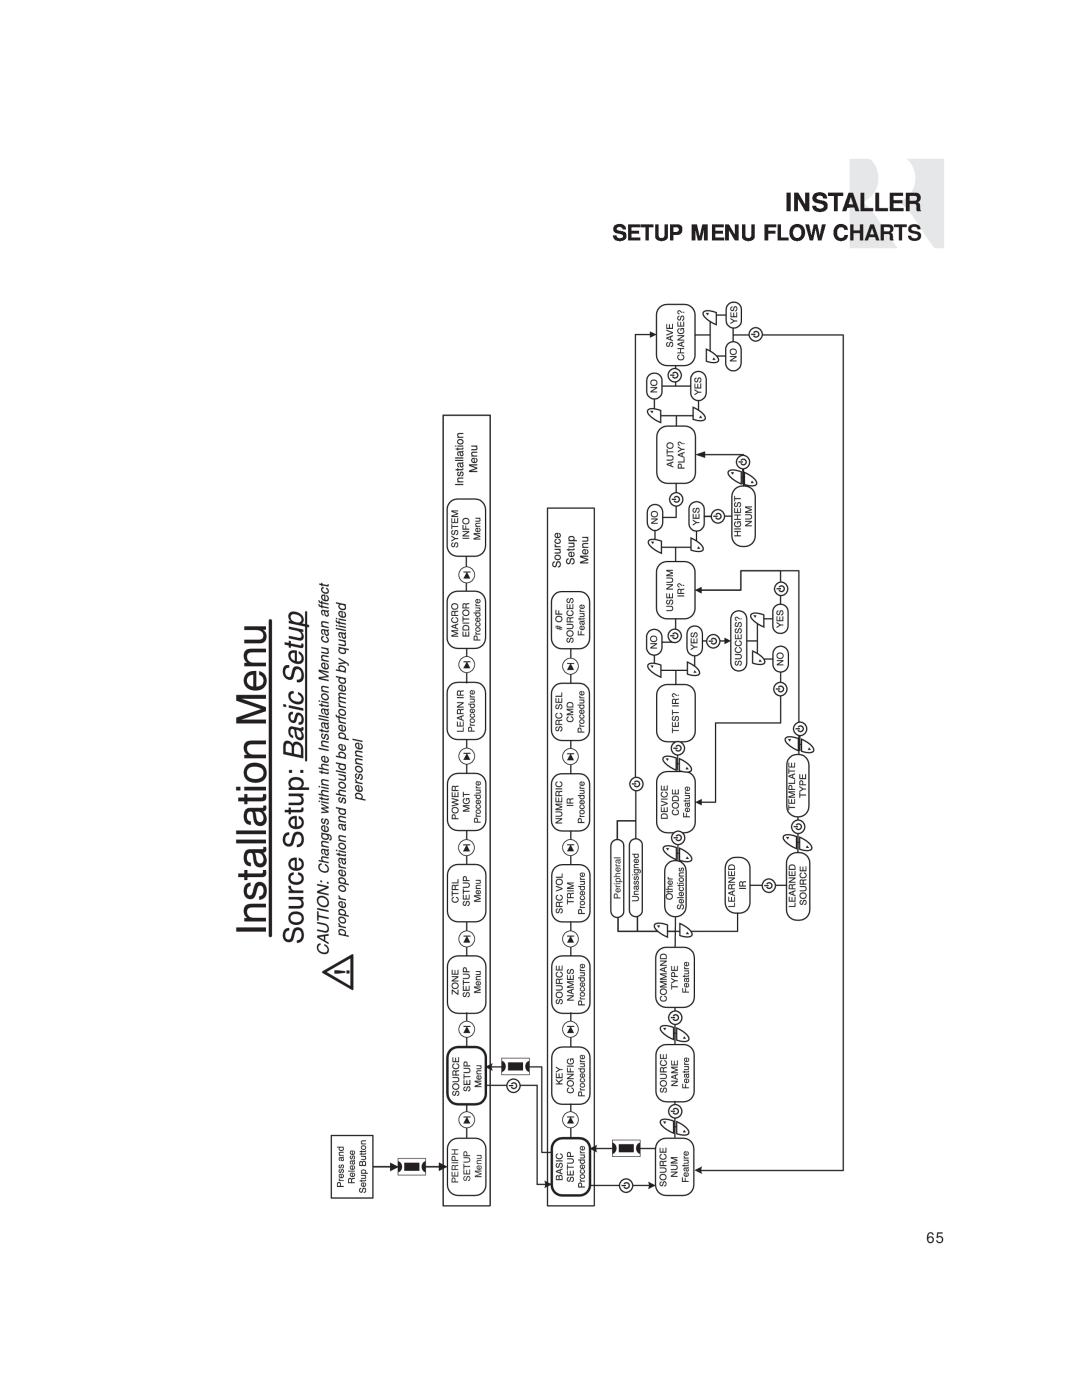 Russound CAM6.6T-S1 instruction manual Setup Menu Flow Charts, Installer, Peripheral 